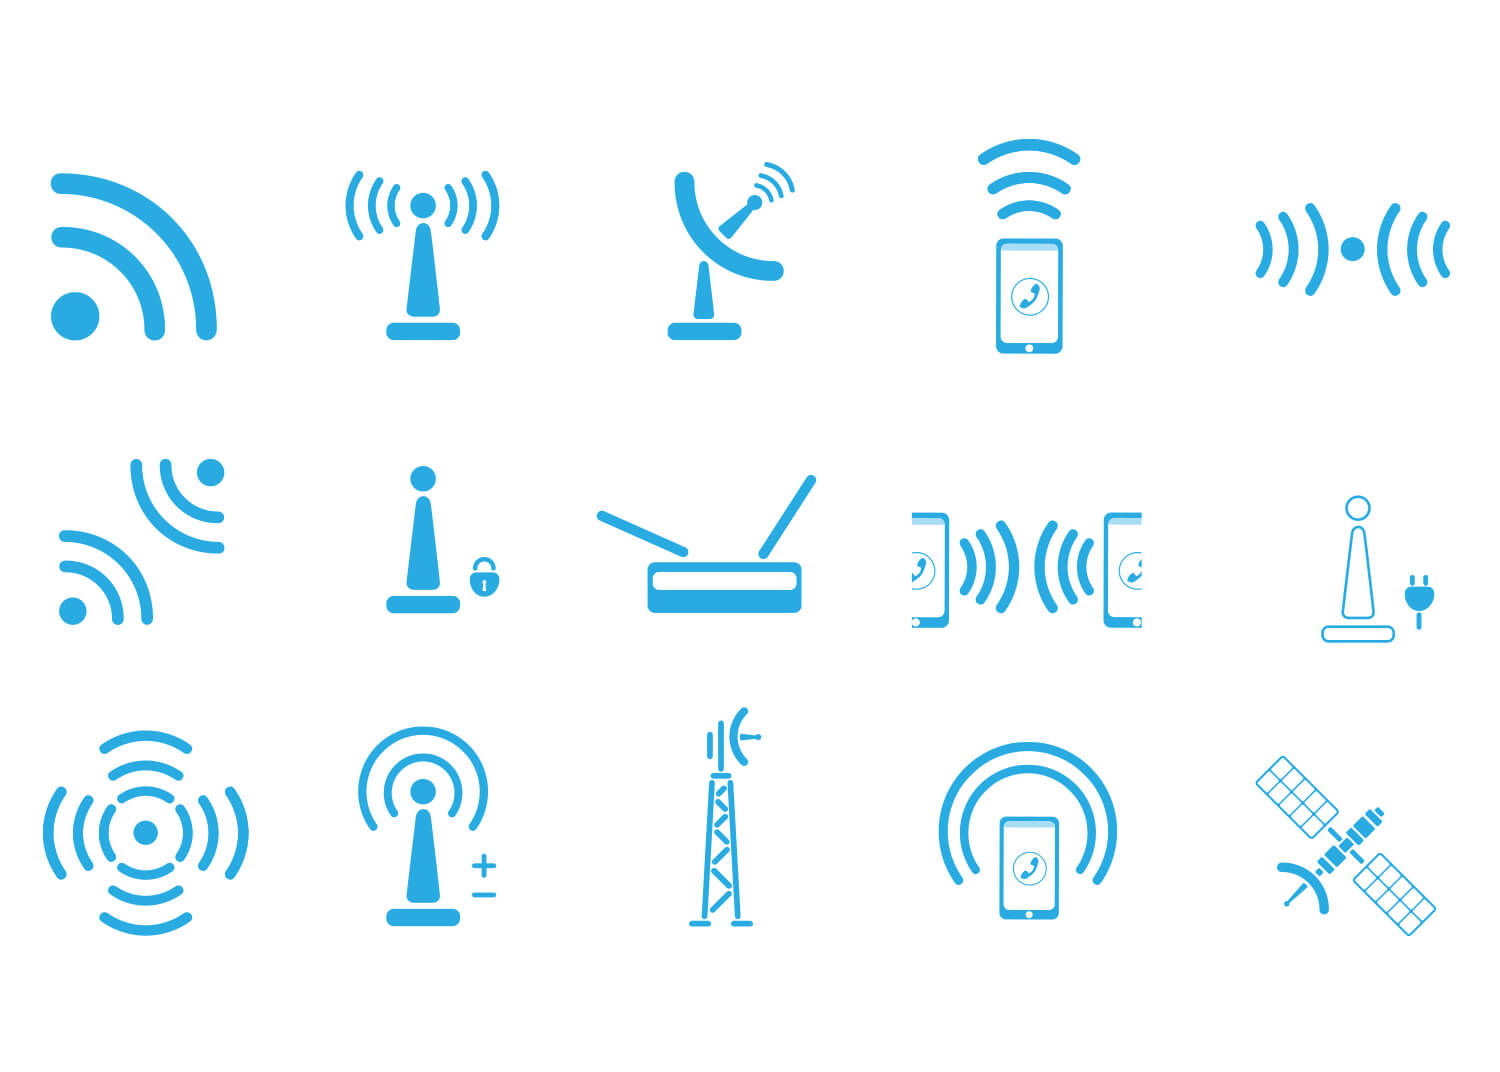 Signal Icons